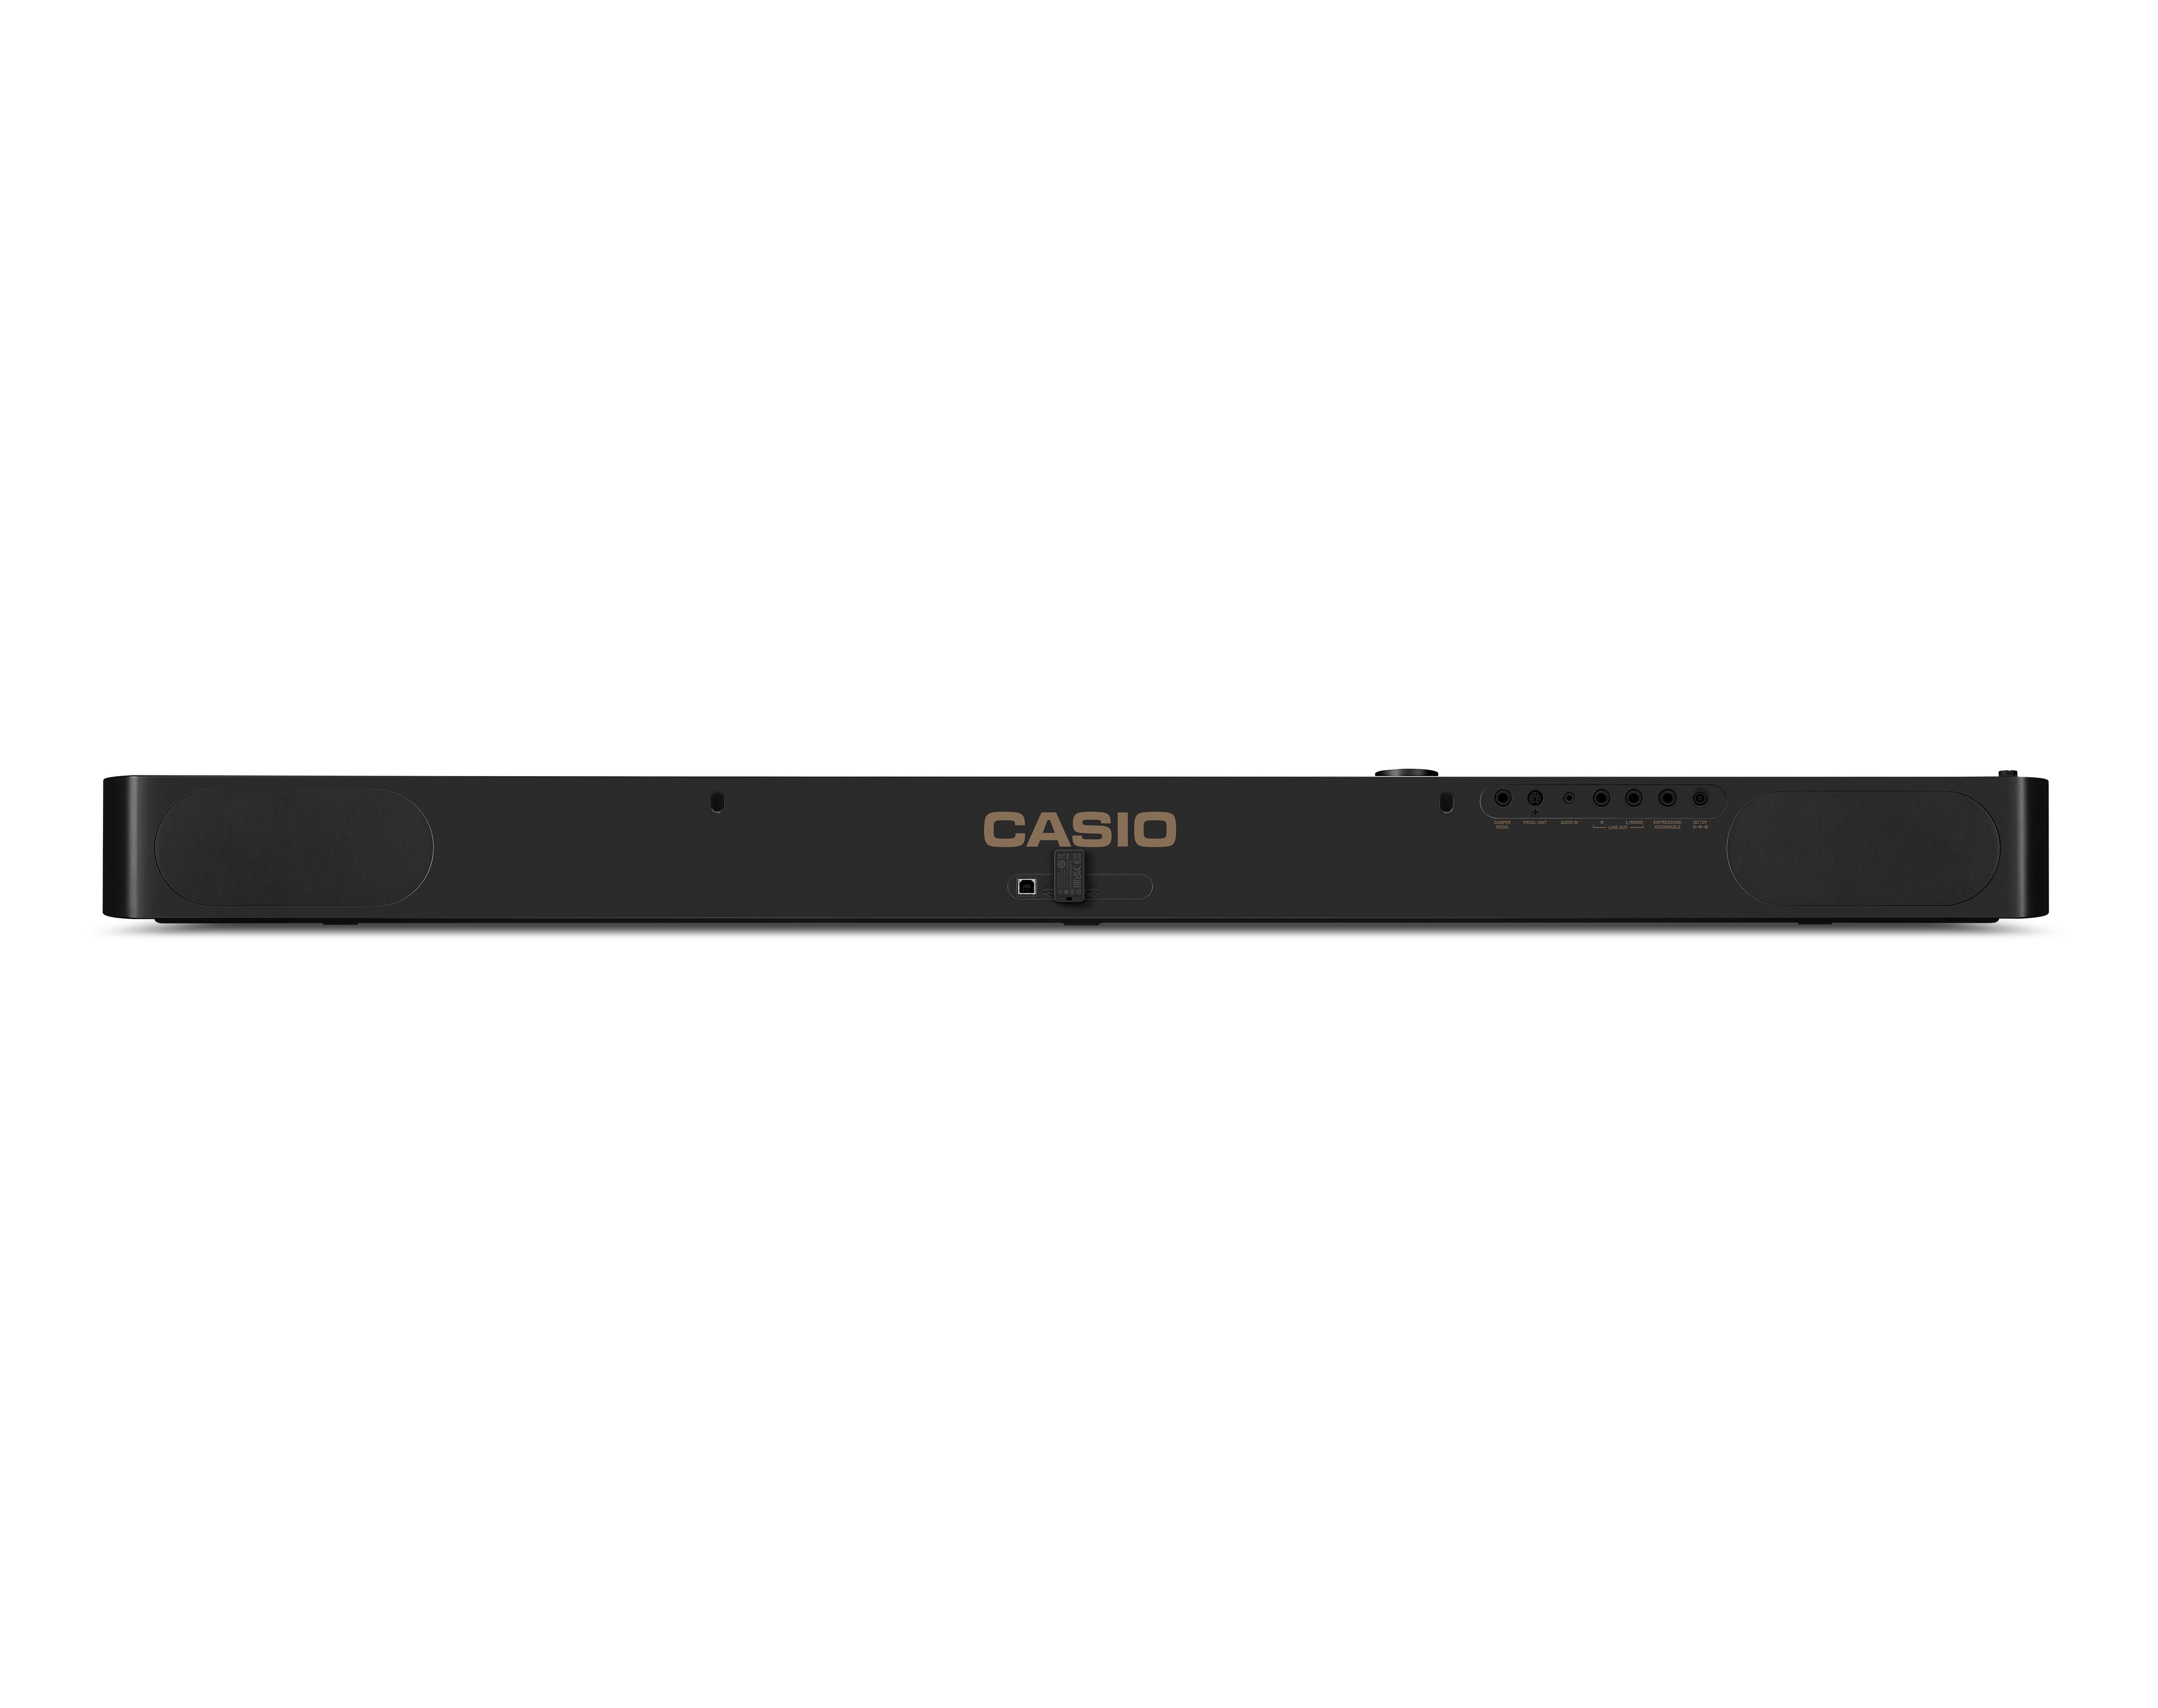 Casio PX-S3100 88-Key Portable Digital Piano